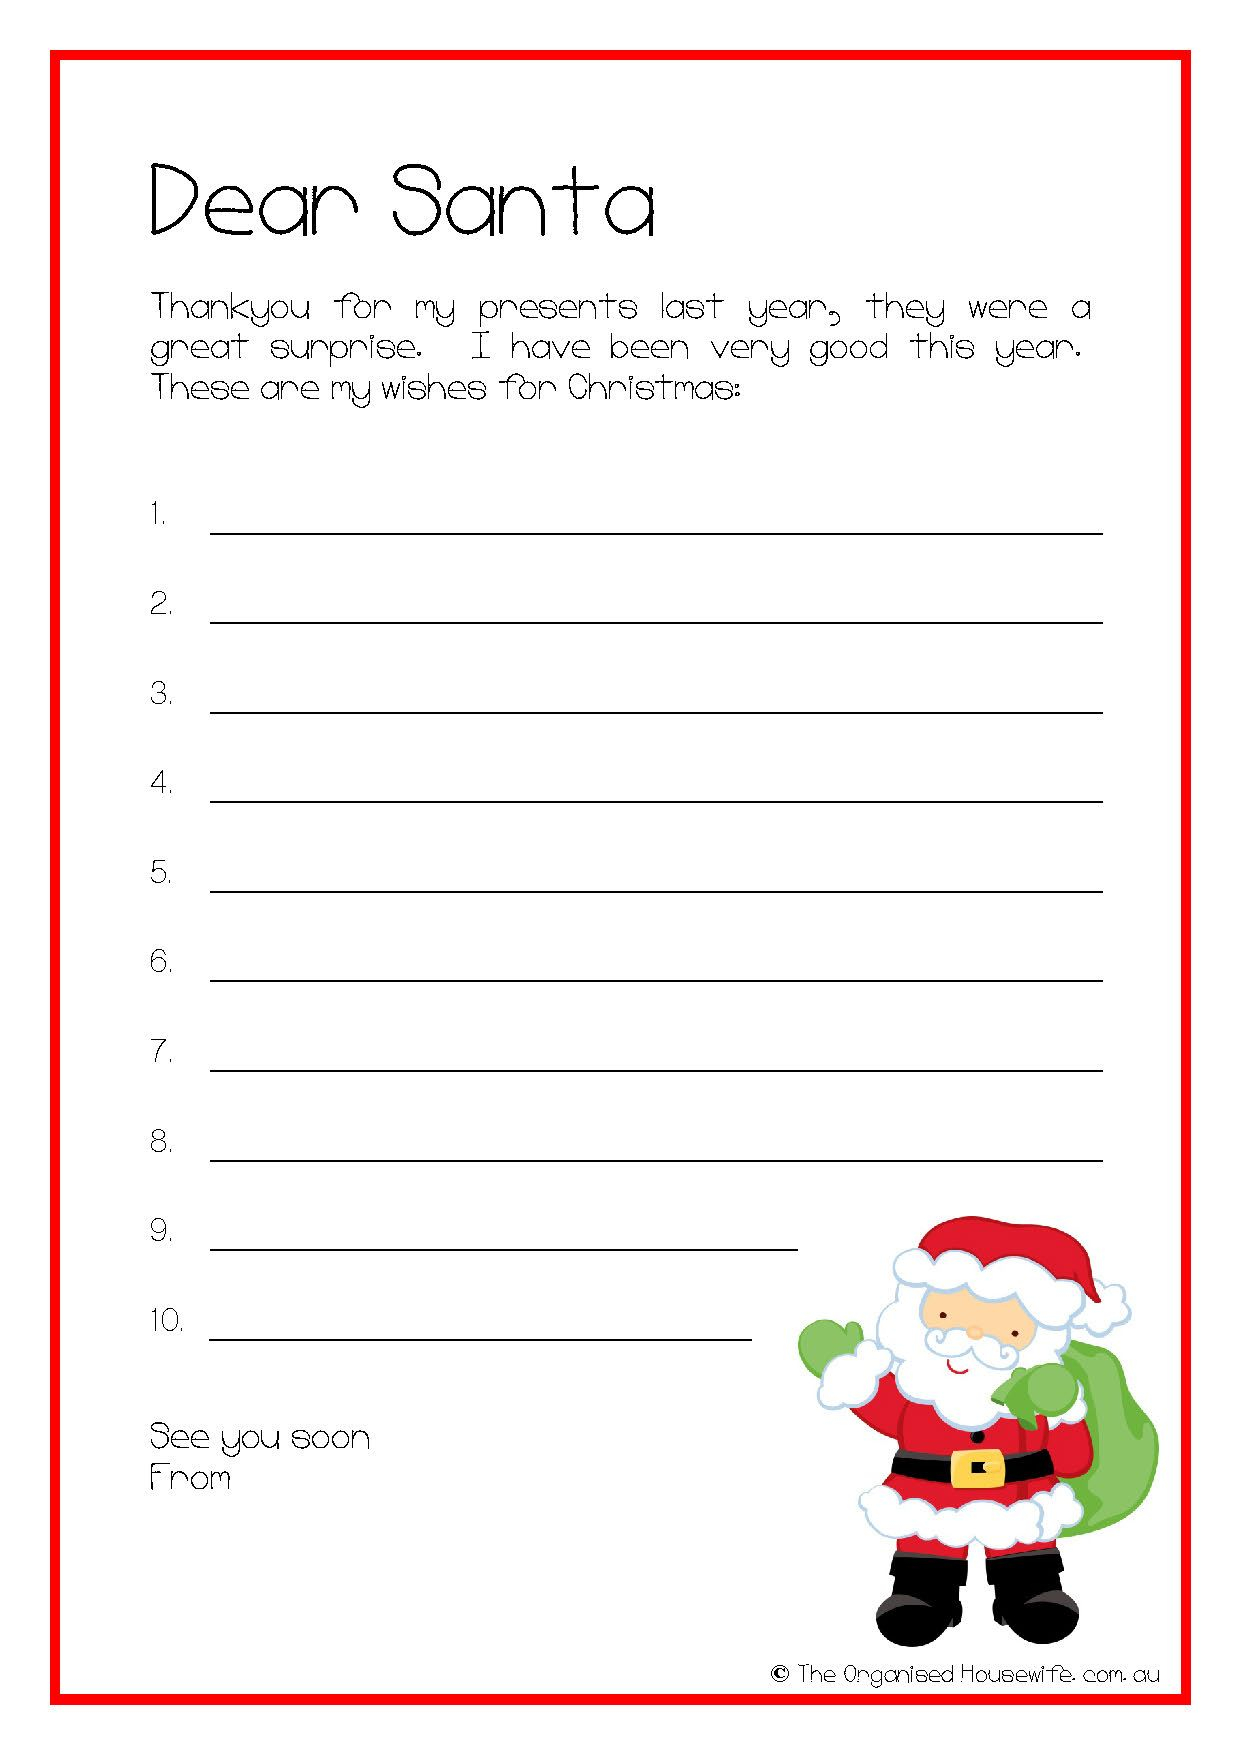 Dear Santa Letter Template Free - Printable Kids Wish List to Santa Pinterest